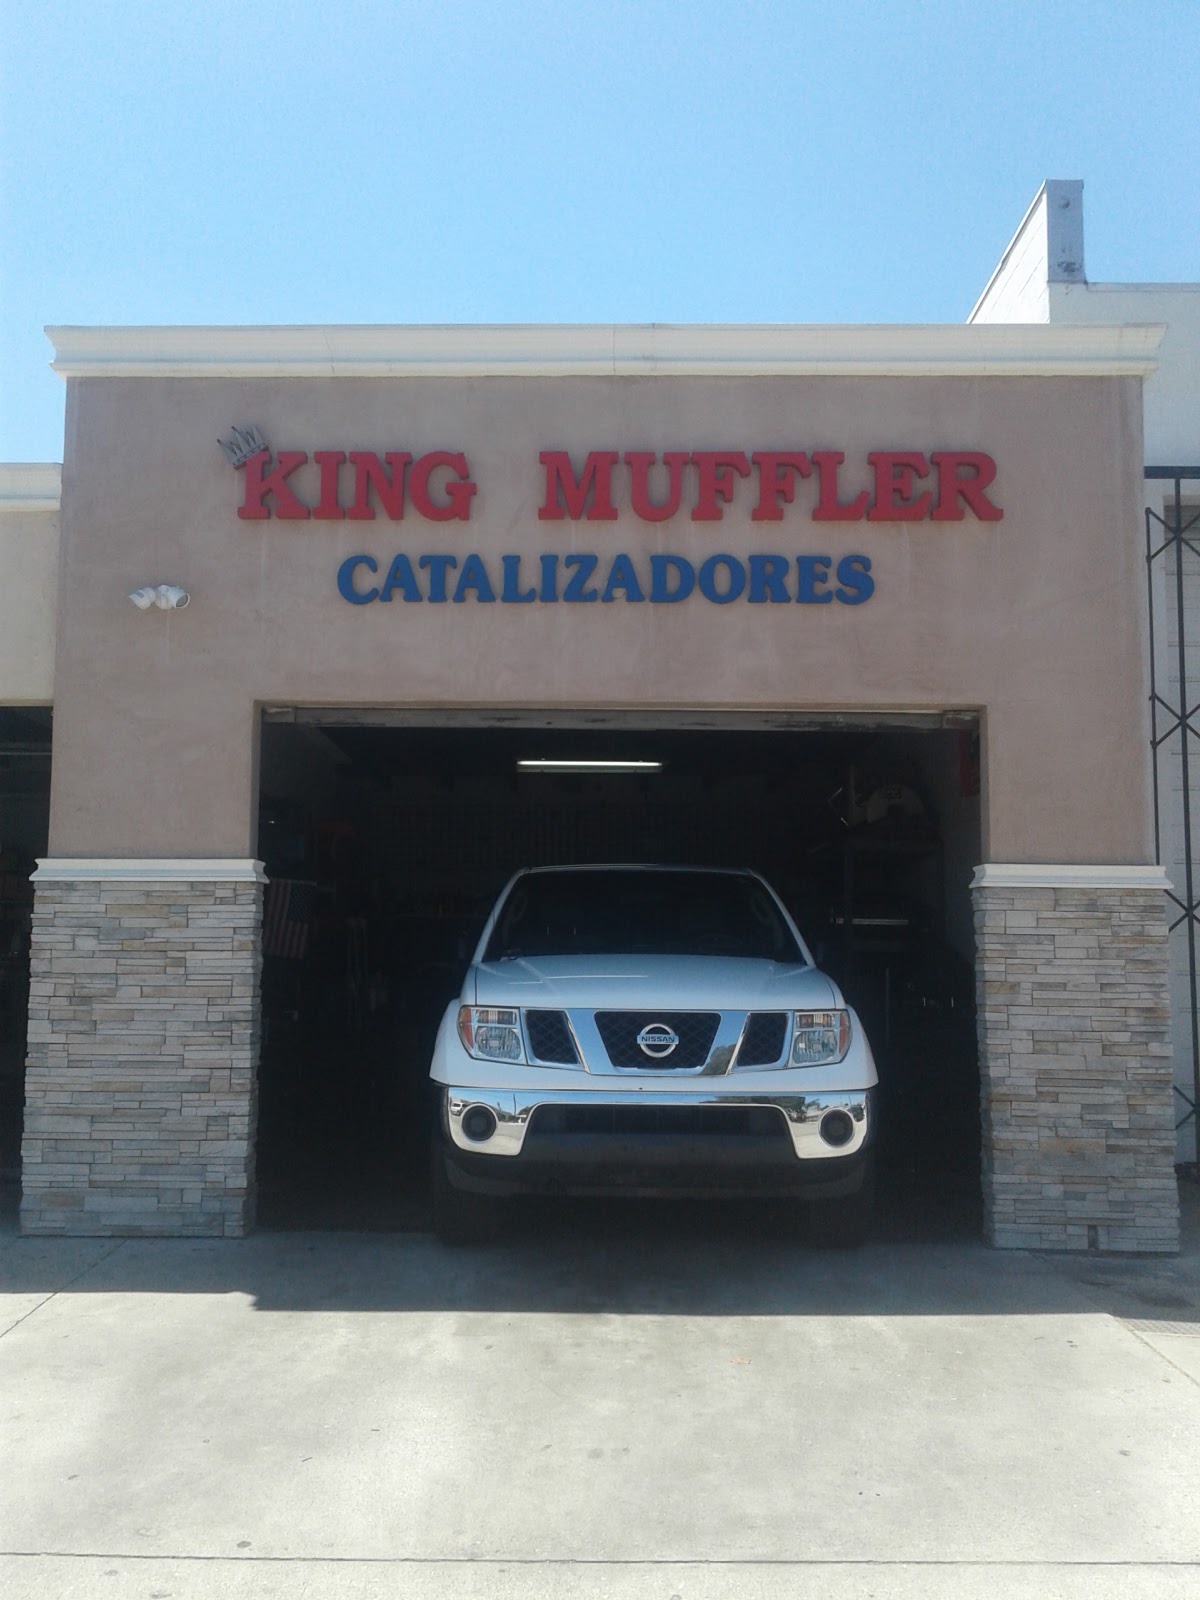 THE NEW KING MUFFLER SHOP